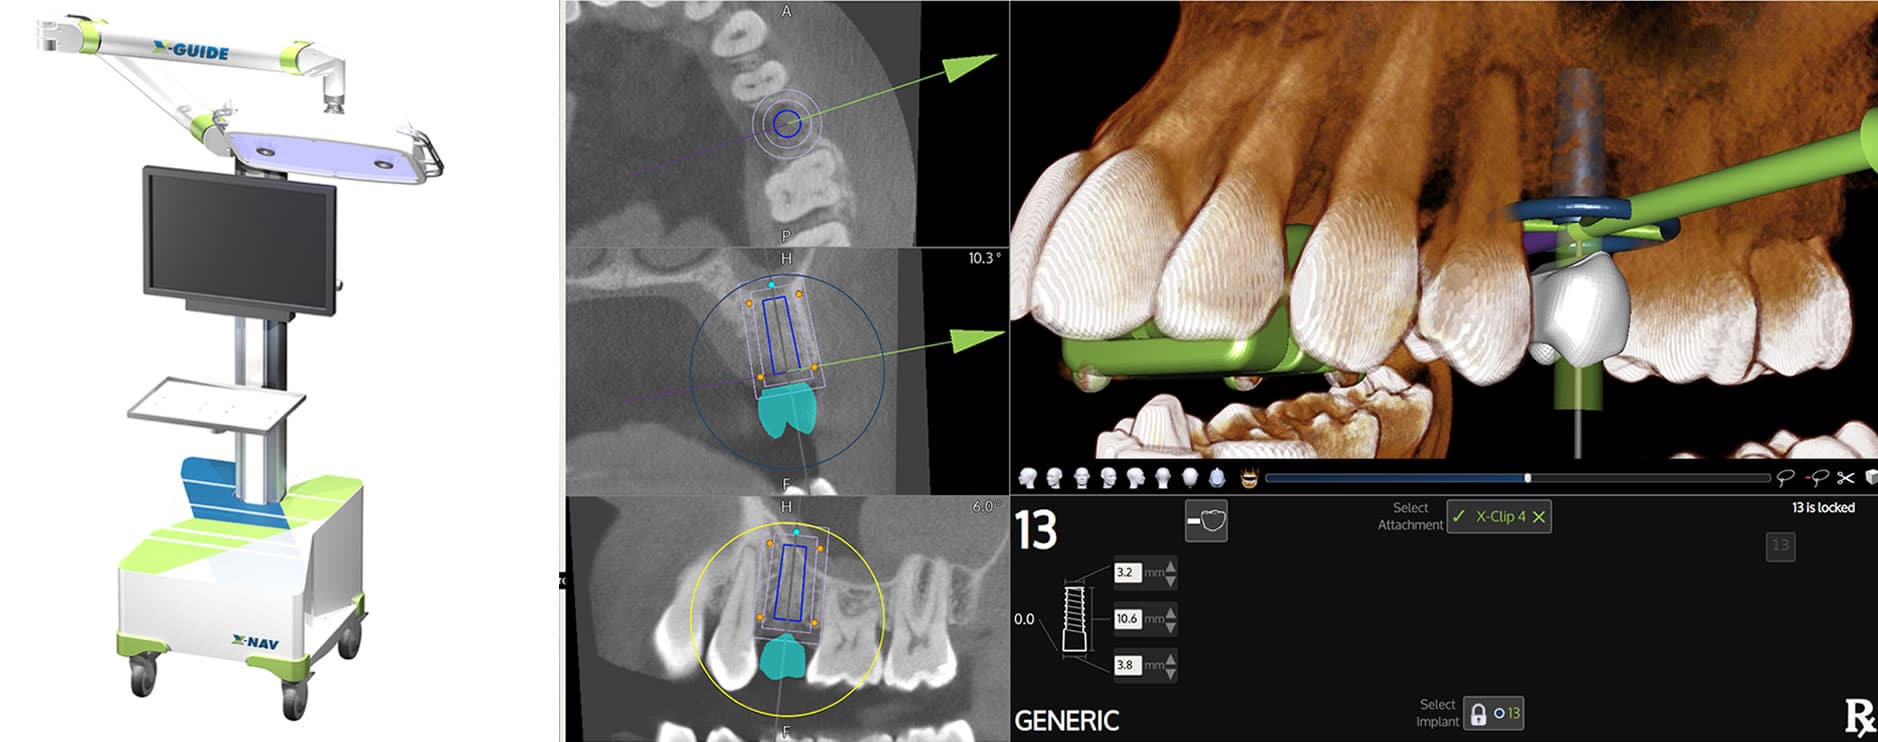 Dental Implant in progress Example